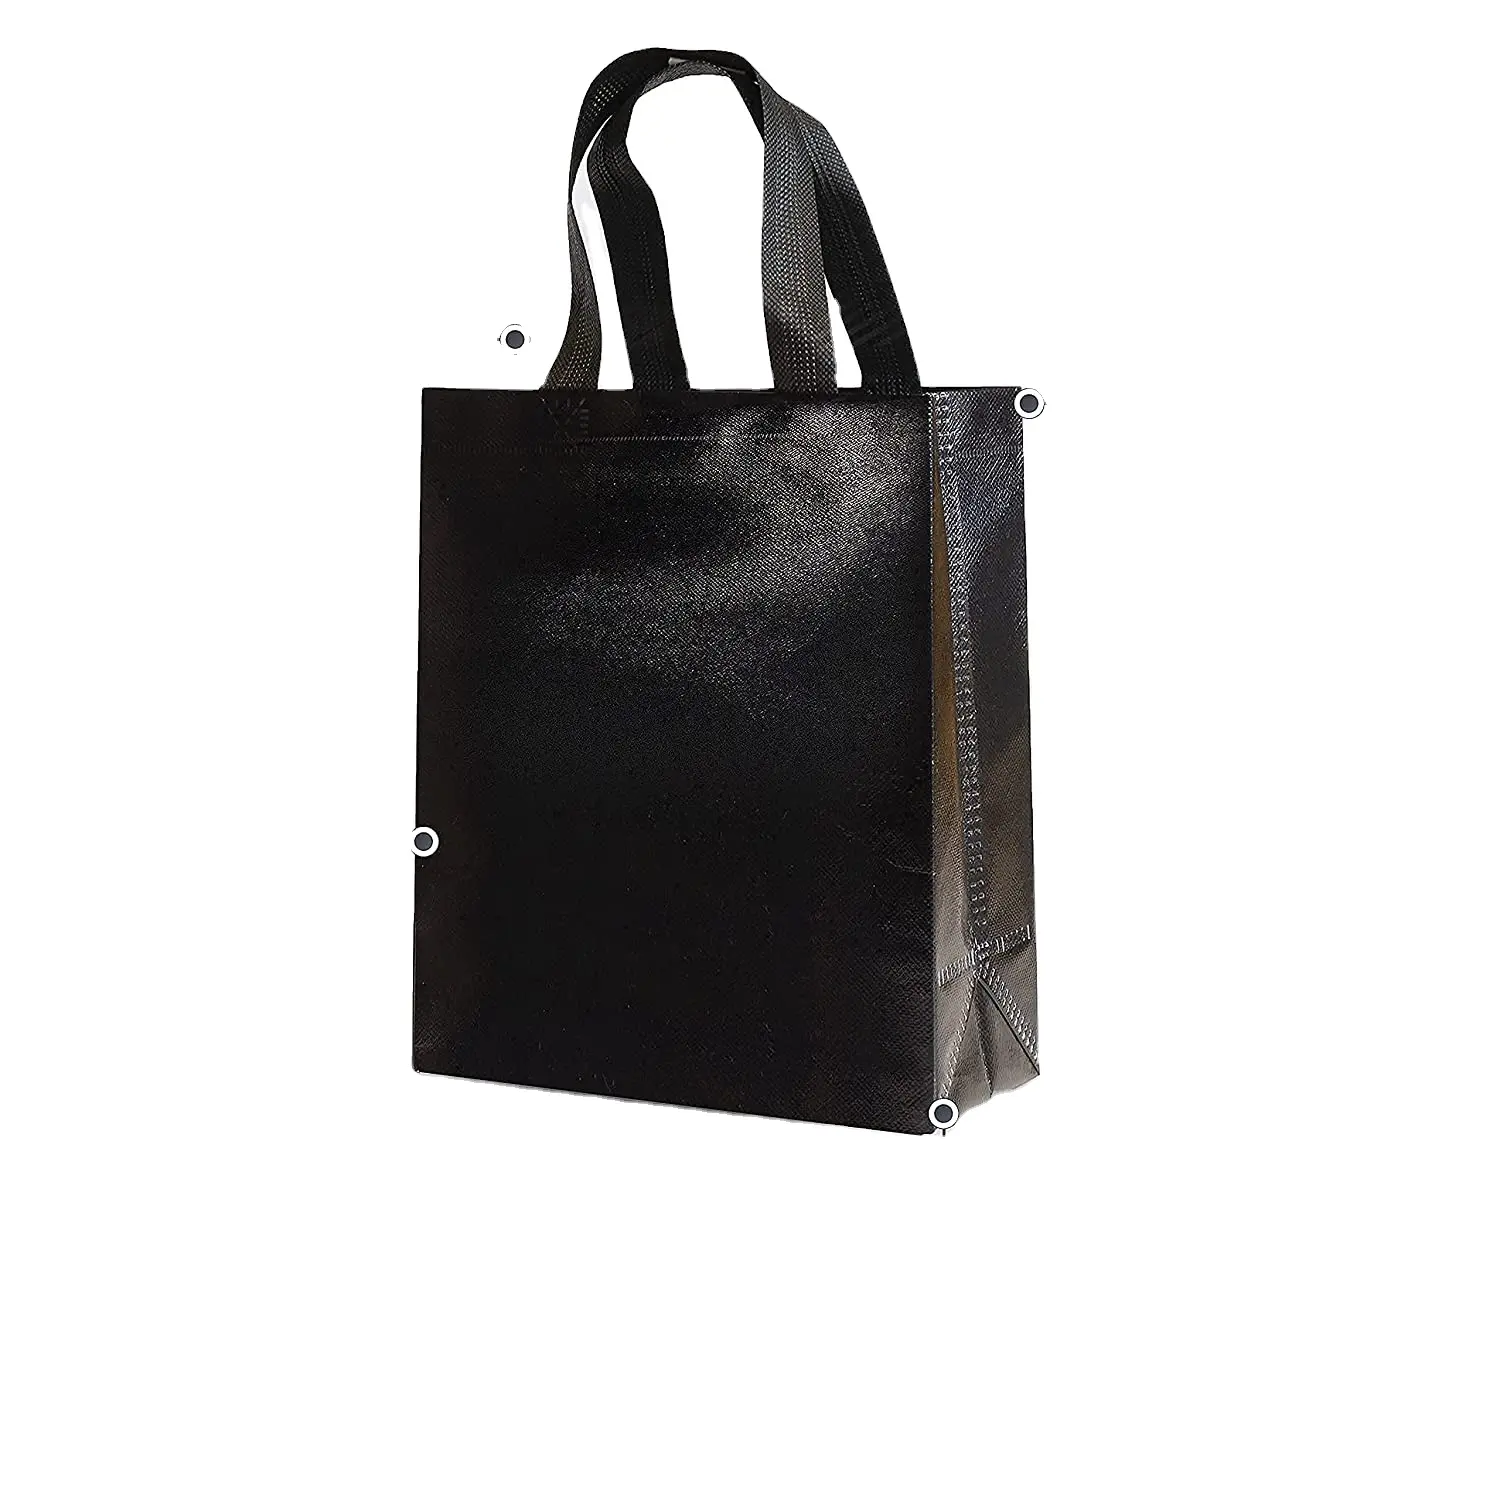 अनुकूलित मुद्रित अपने खुद के लोगो काले गैर बुना कपड़ा बैग पीपी Nonwoven शॉपिंग बैग